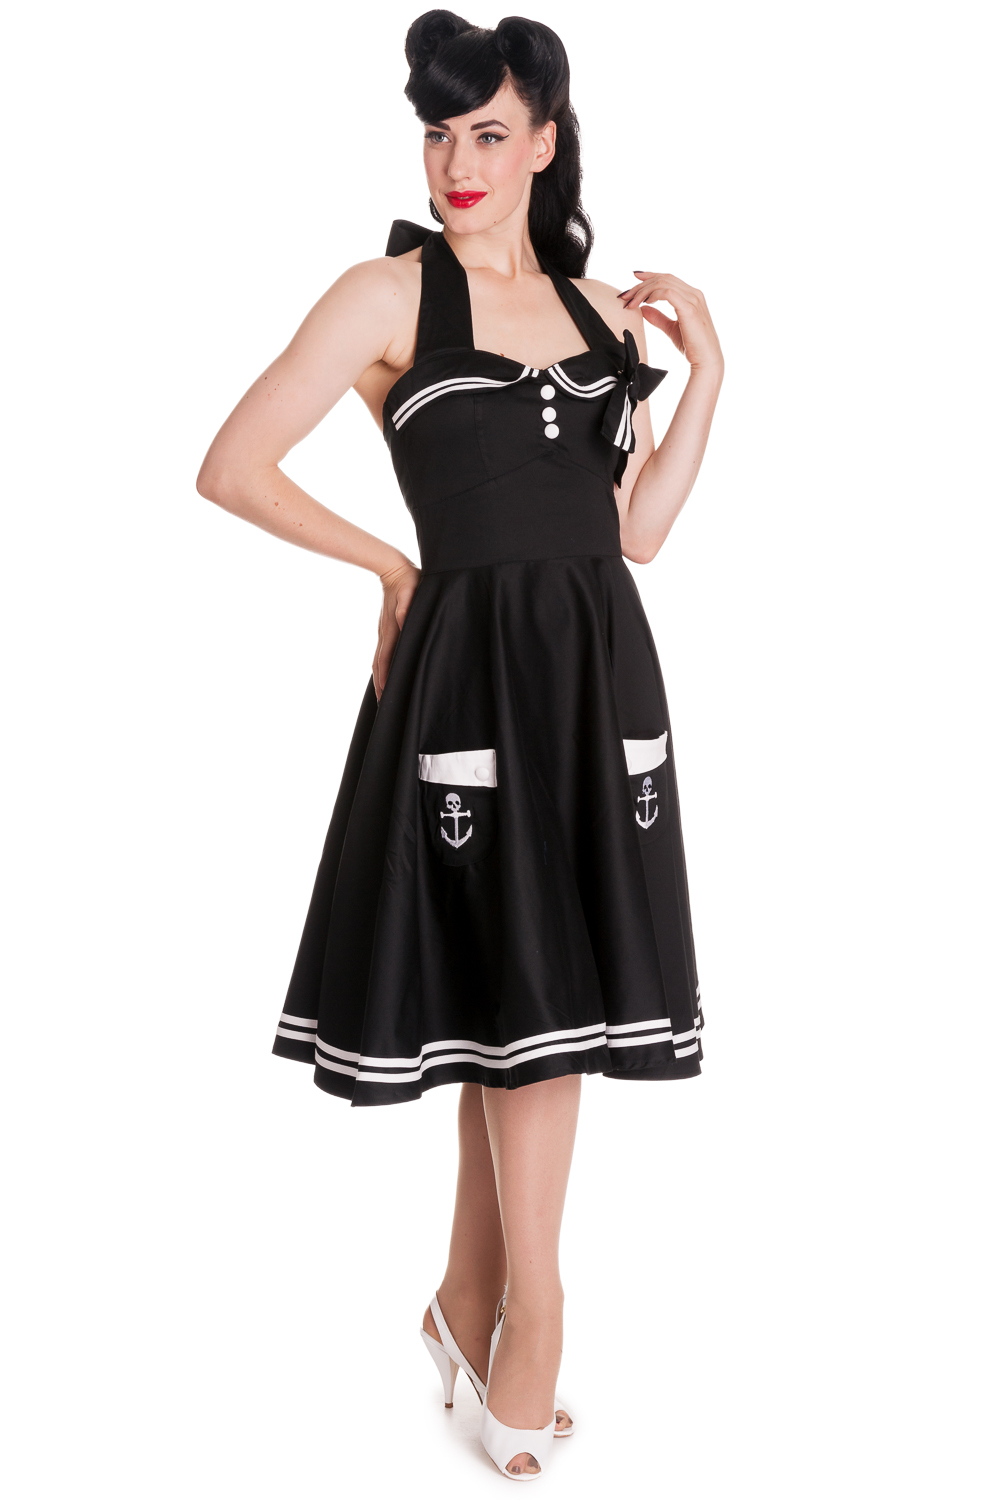 Rkp1 Hell Bunny Motley 50s Retro Sailor Pin Up Dress Rockabilly Swing Prom Ebay 8417